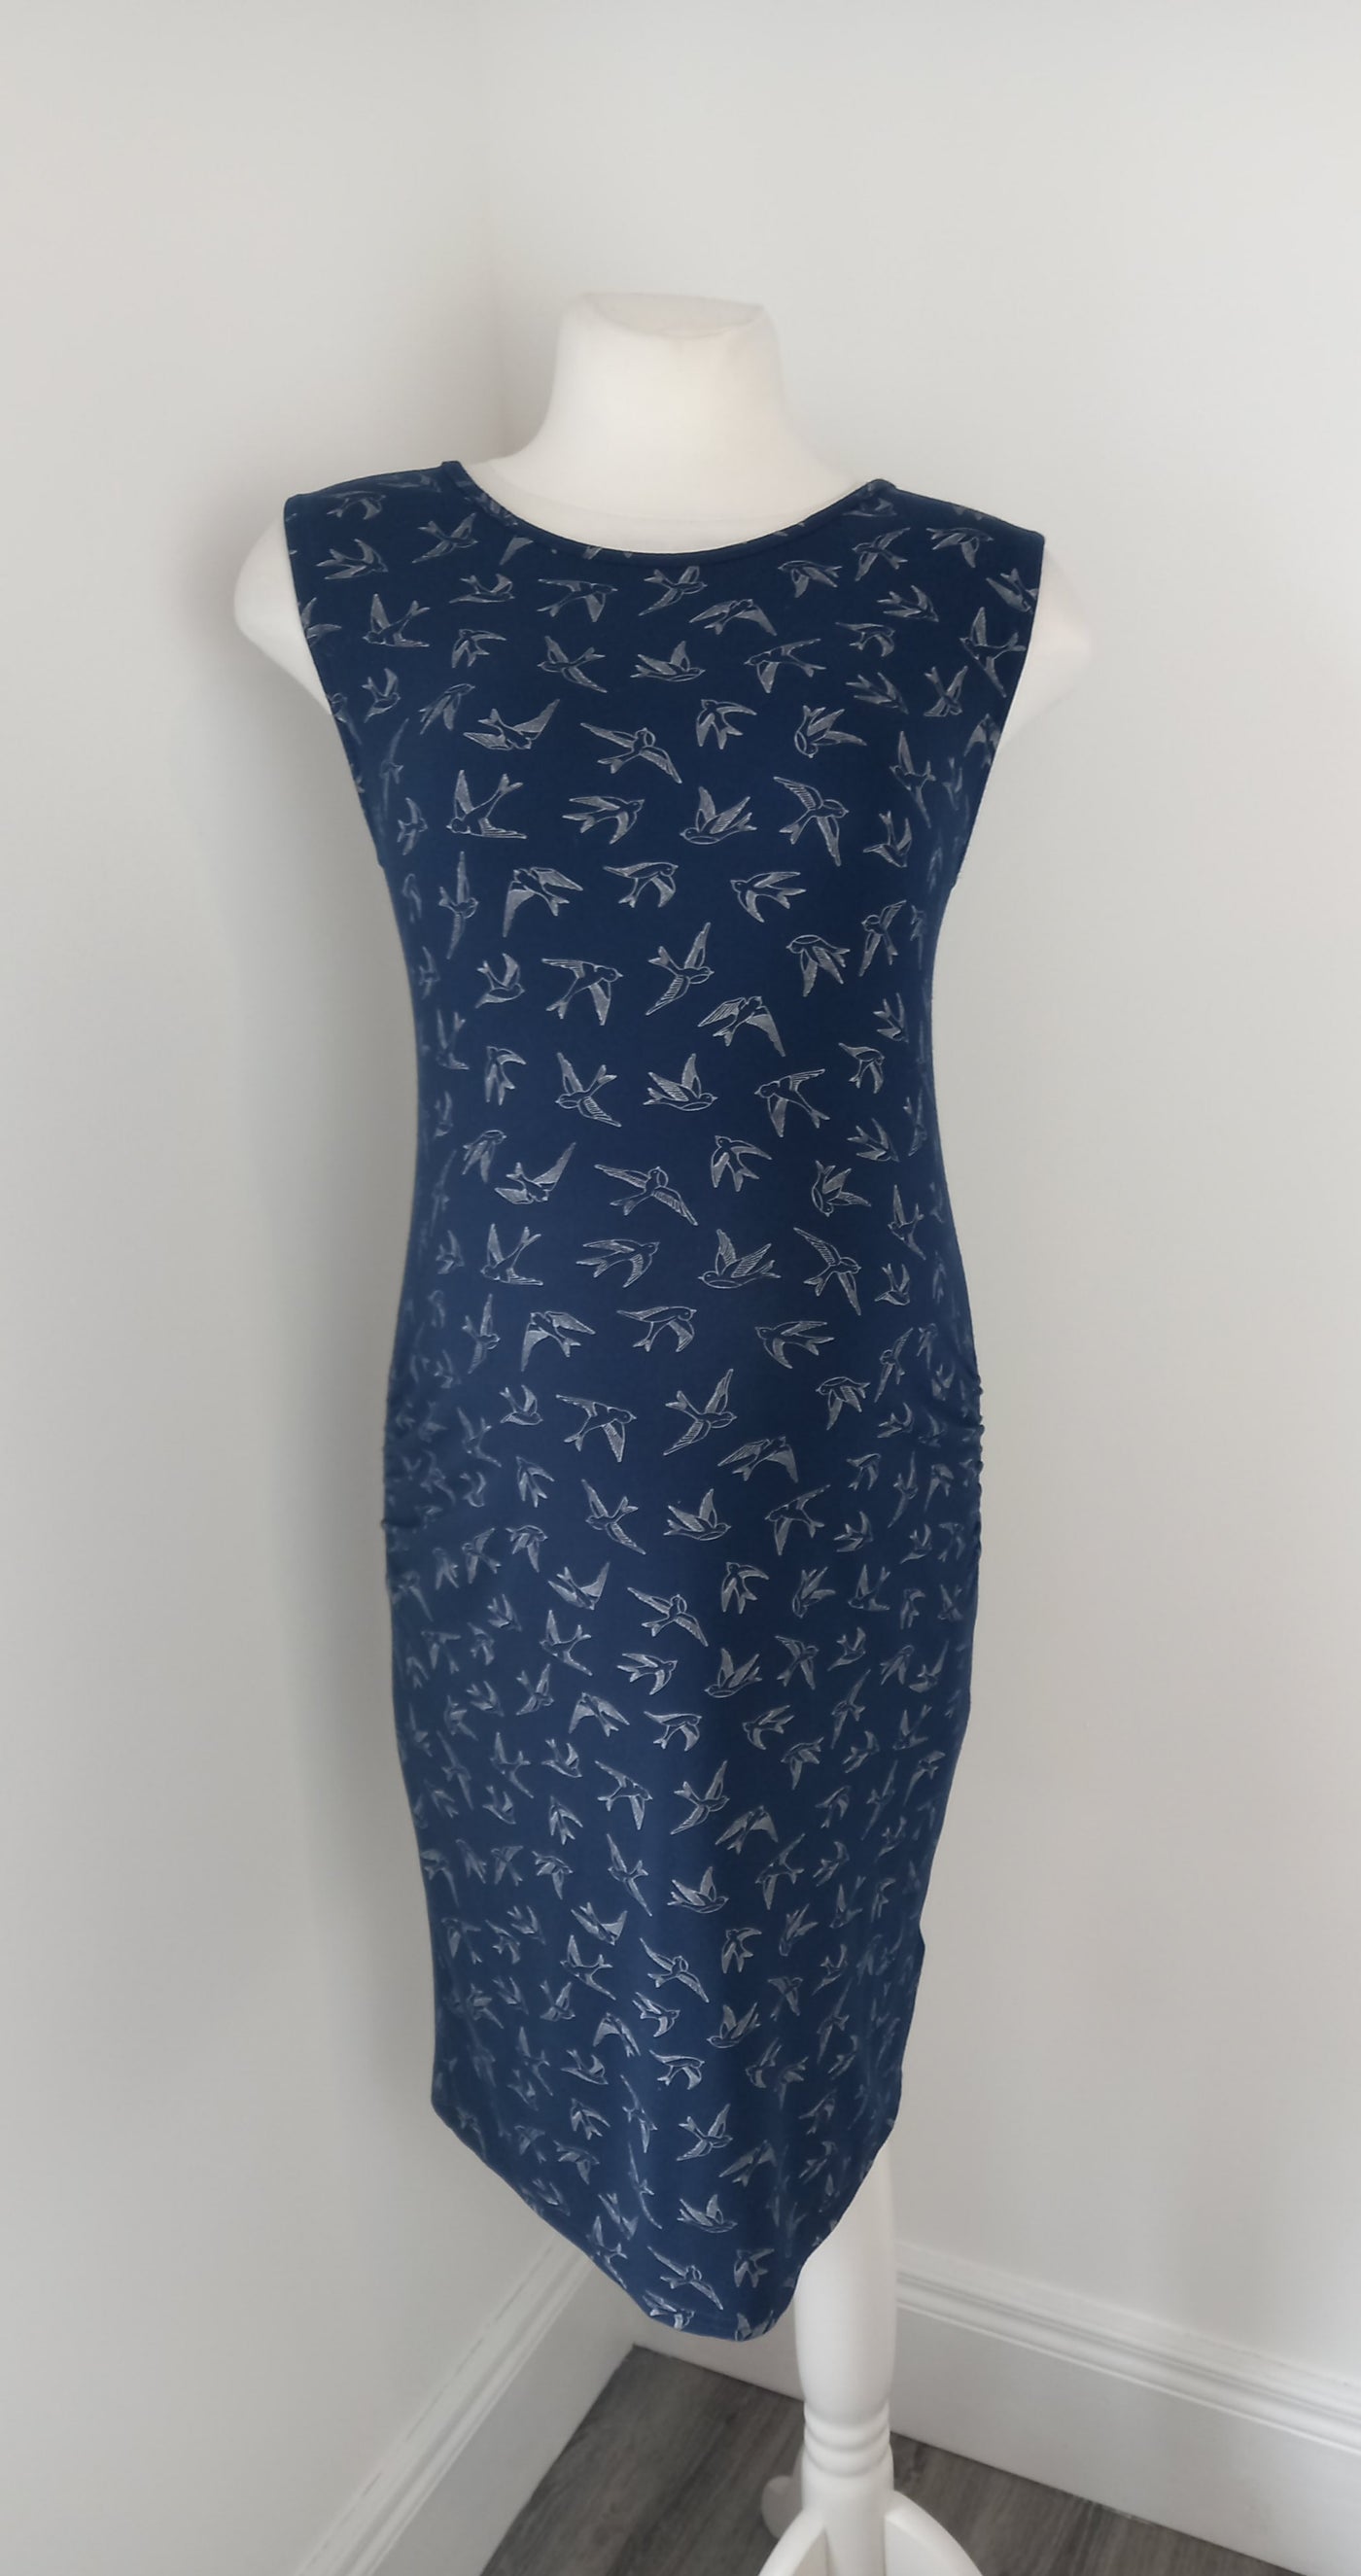 New Look Maternity navy bird print sleeveless dress - Size 12